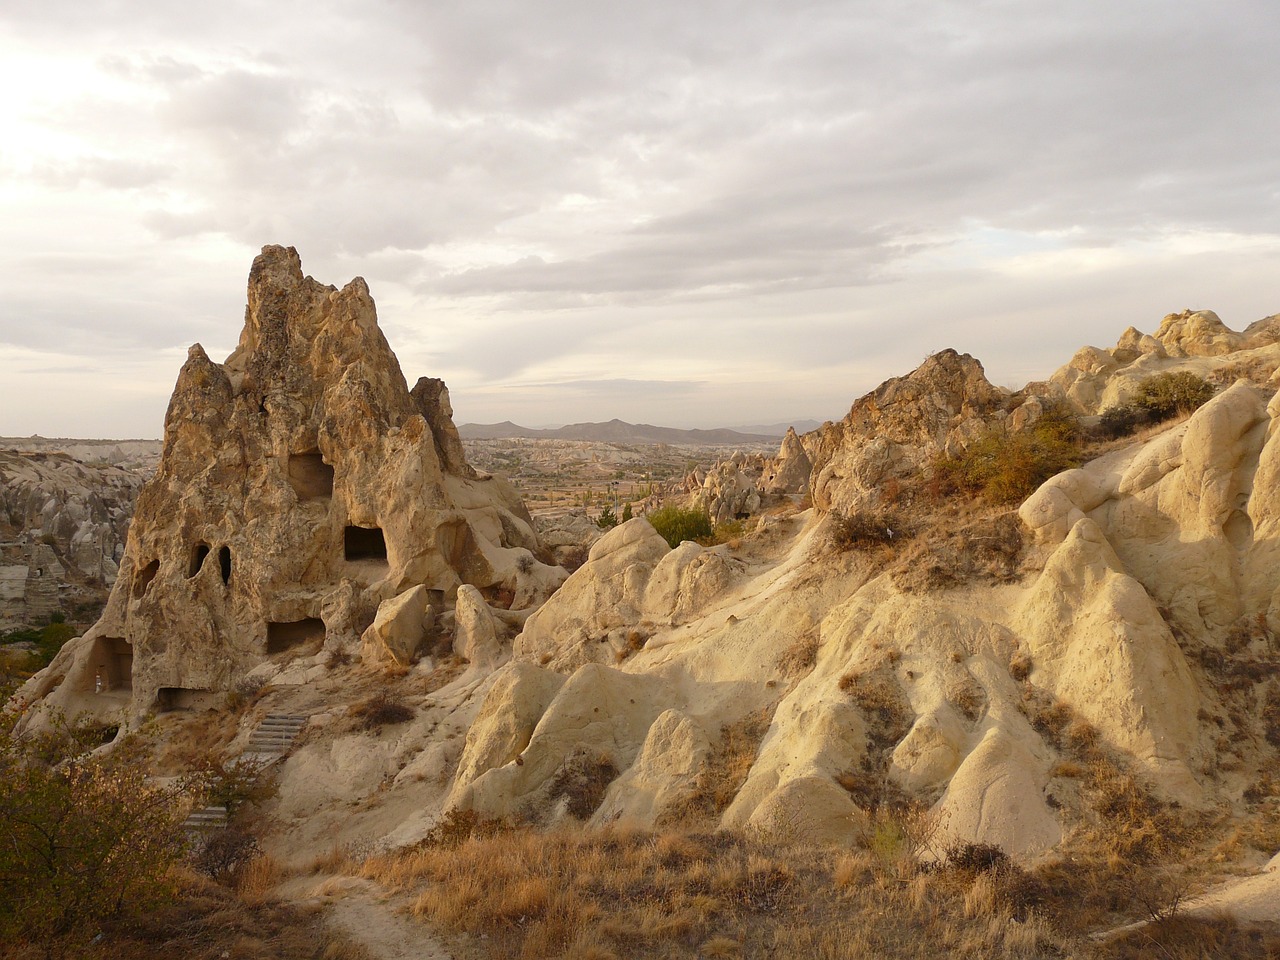 Göreme Open Air Museum, Cappadocia is one of the Turkey landmakrs